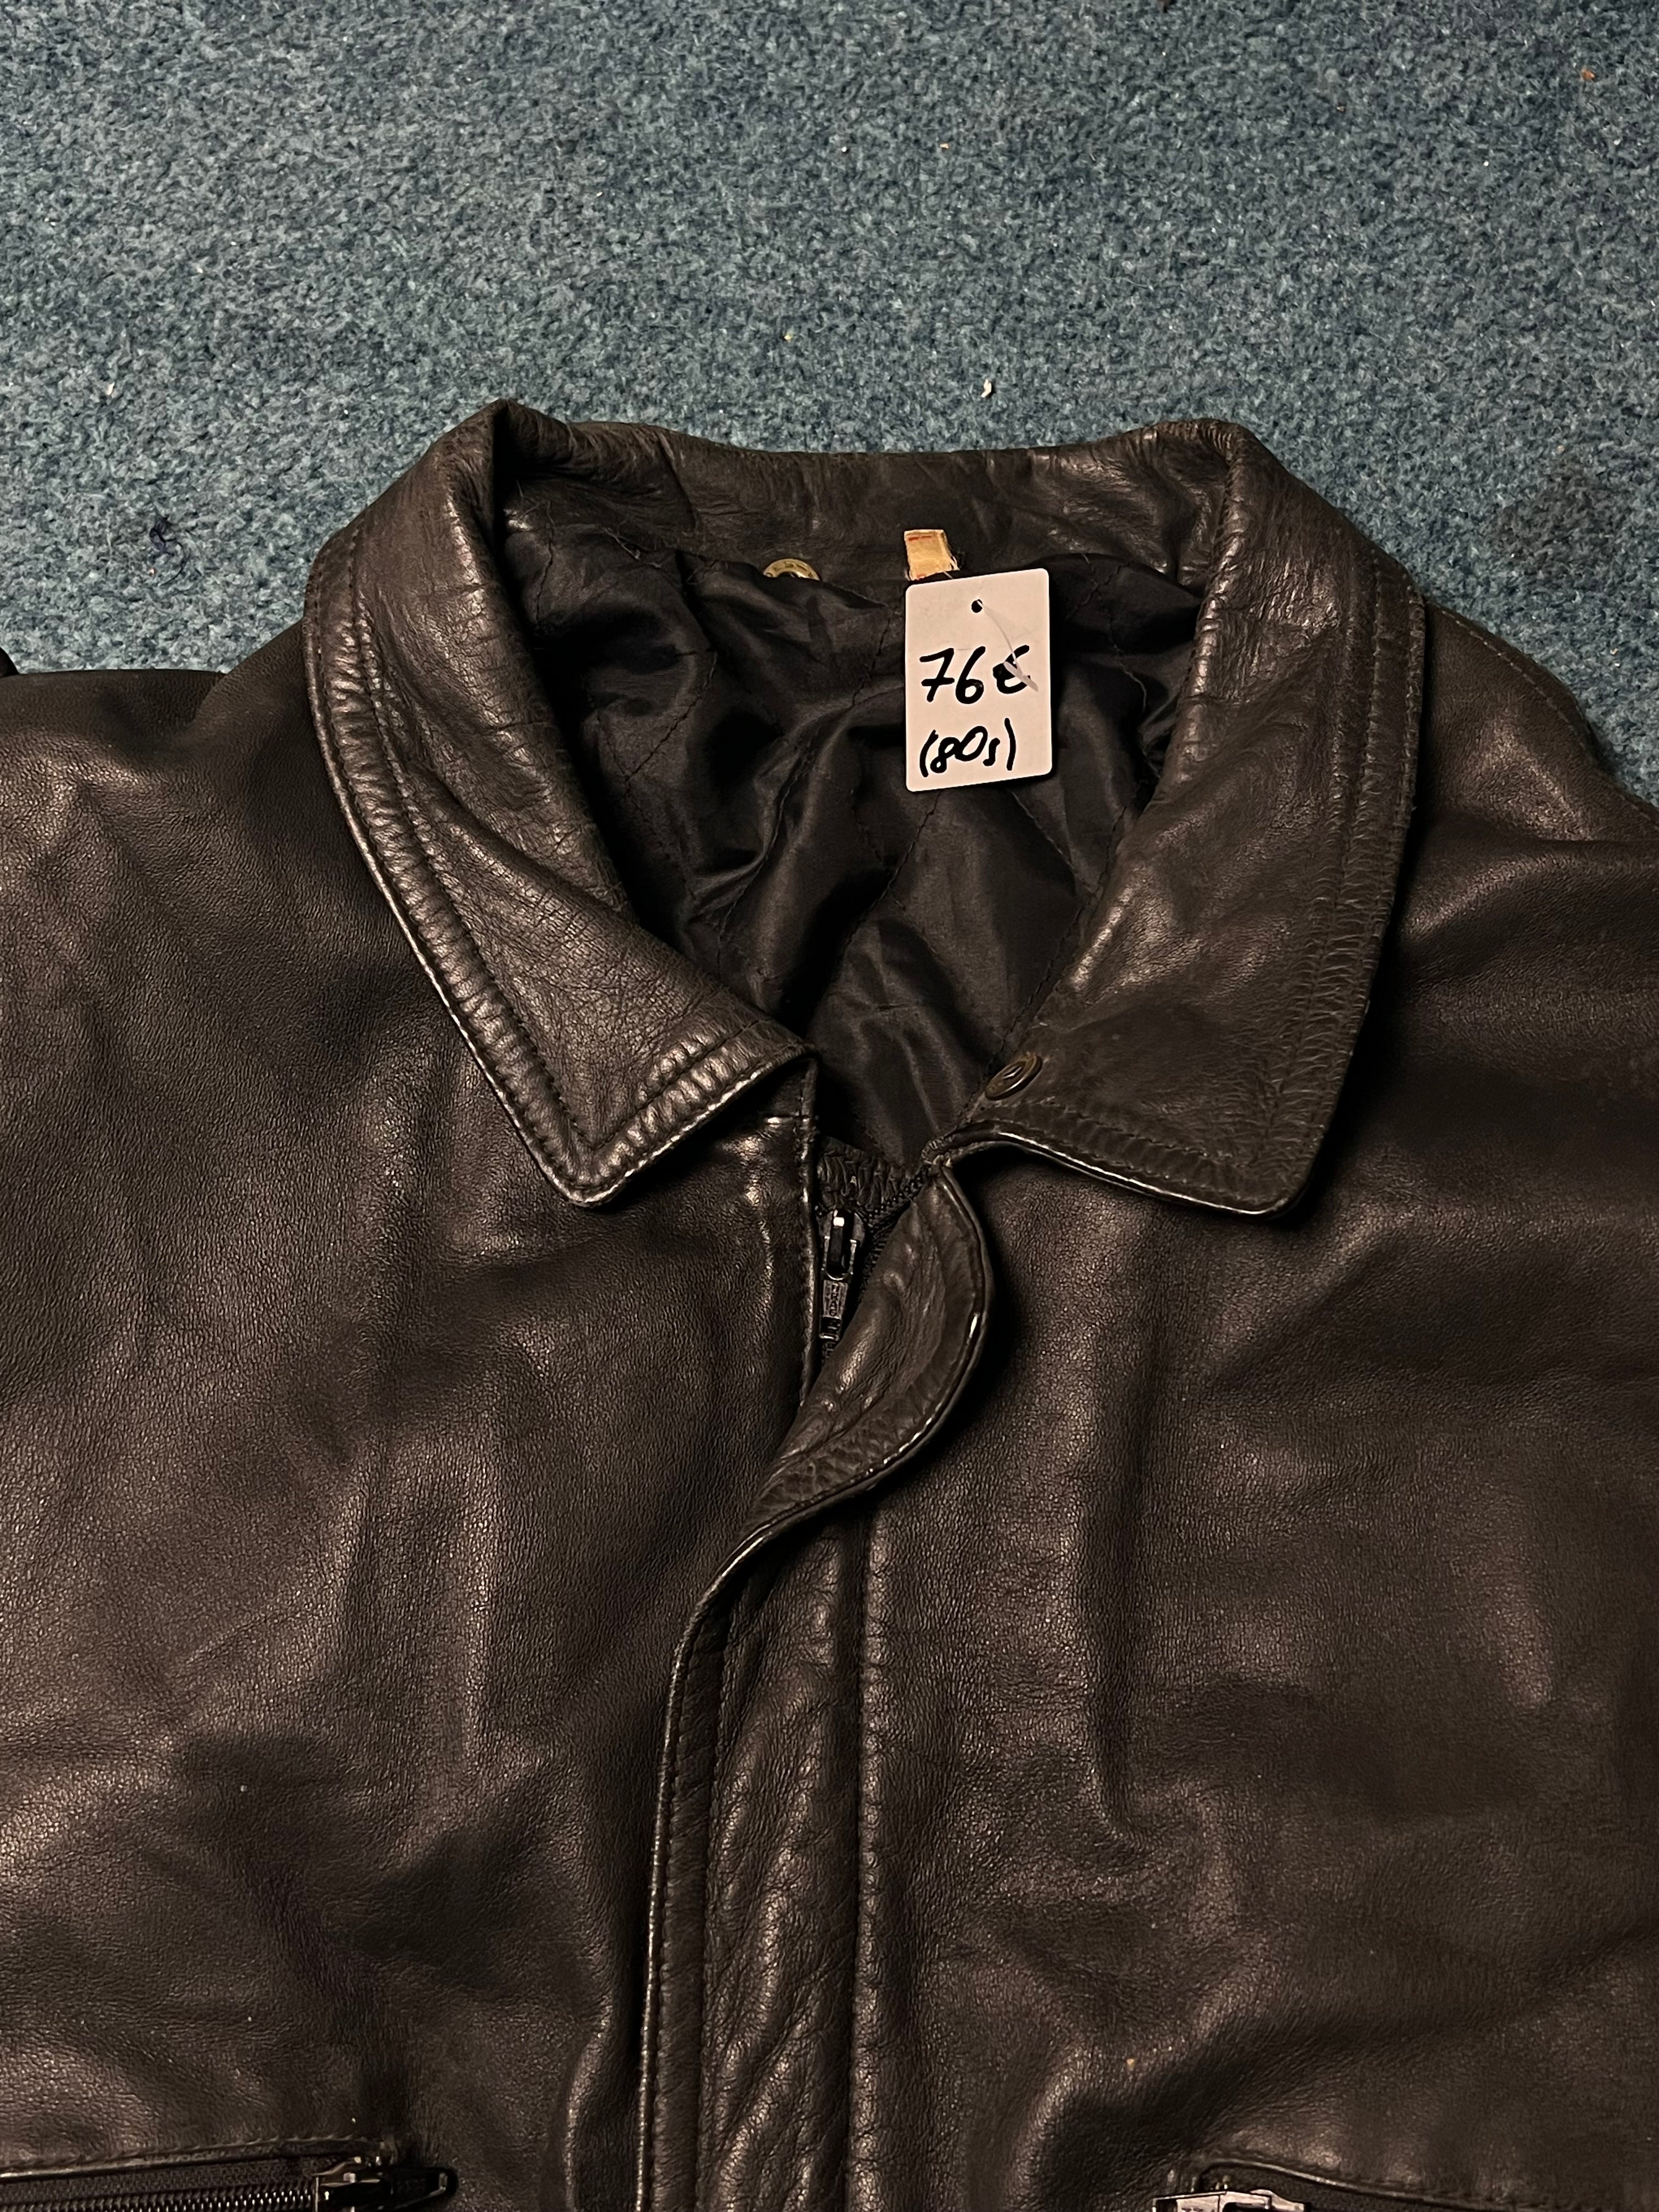 Vintage 80s 90s Heavy Leather Jacket (XL)